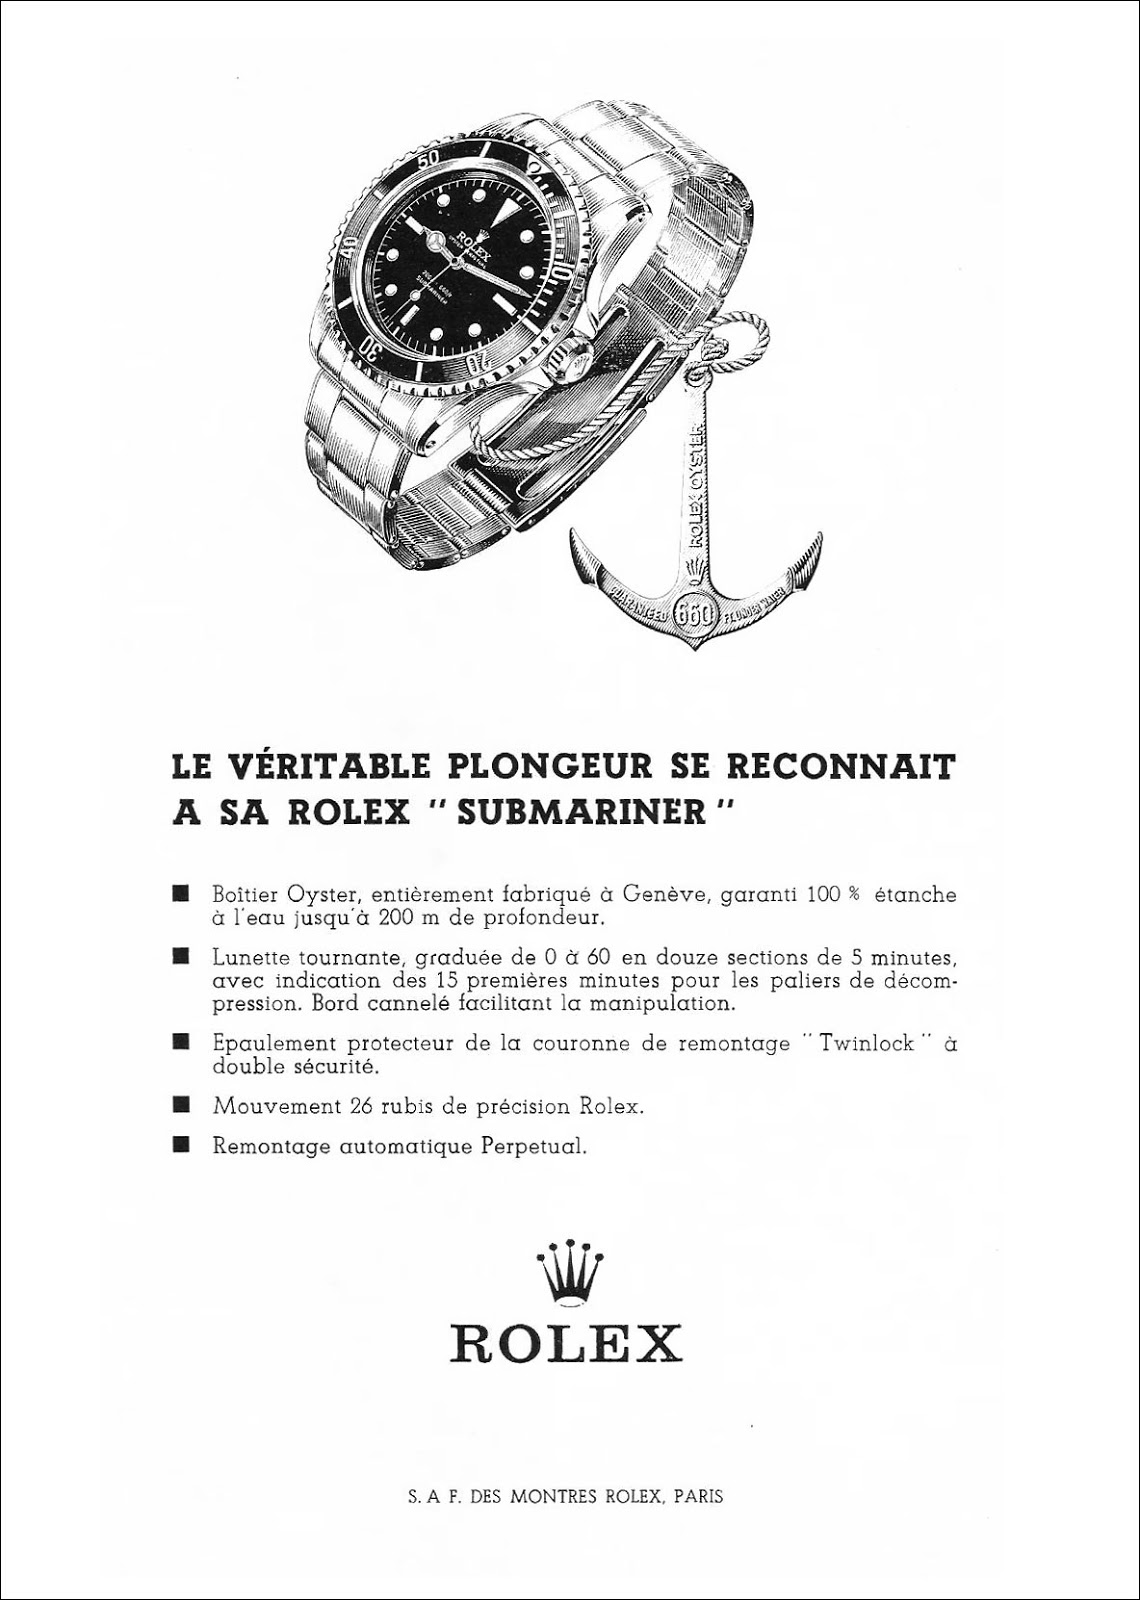 http://1.bp.blogspot.com/-By8YVAat8UA/U9o6z1n2kAI/AAAAAAAAdl8/Z5Xo-NYAjD4/s1600/Plonge%CC%81es-n%C2%B0-21-avril-1964-French-Rolex-Submariner-Ad.jpg